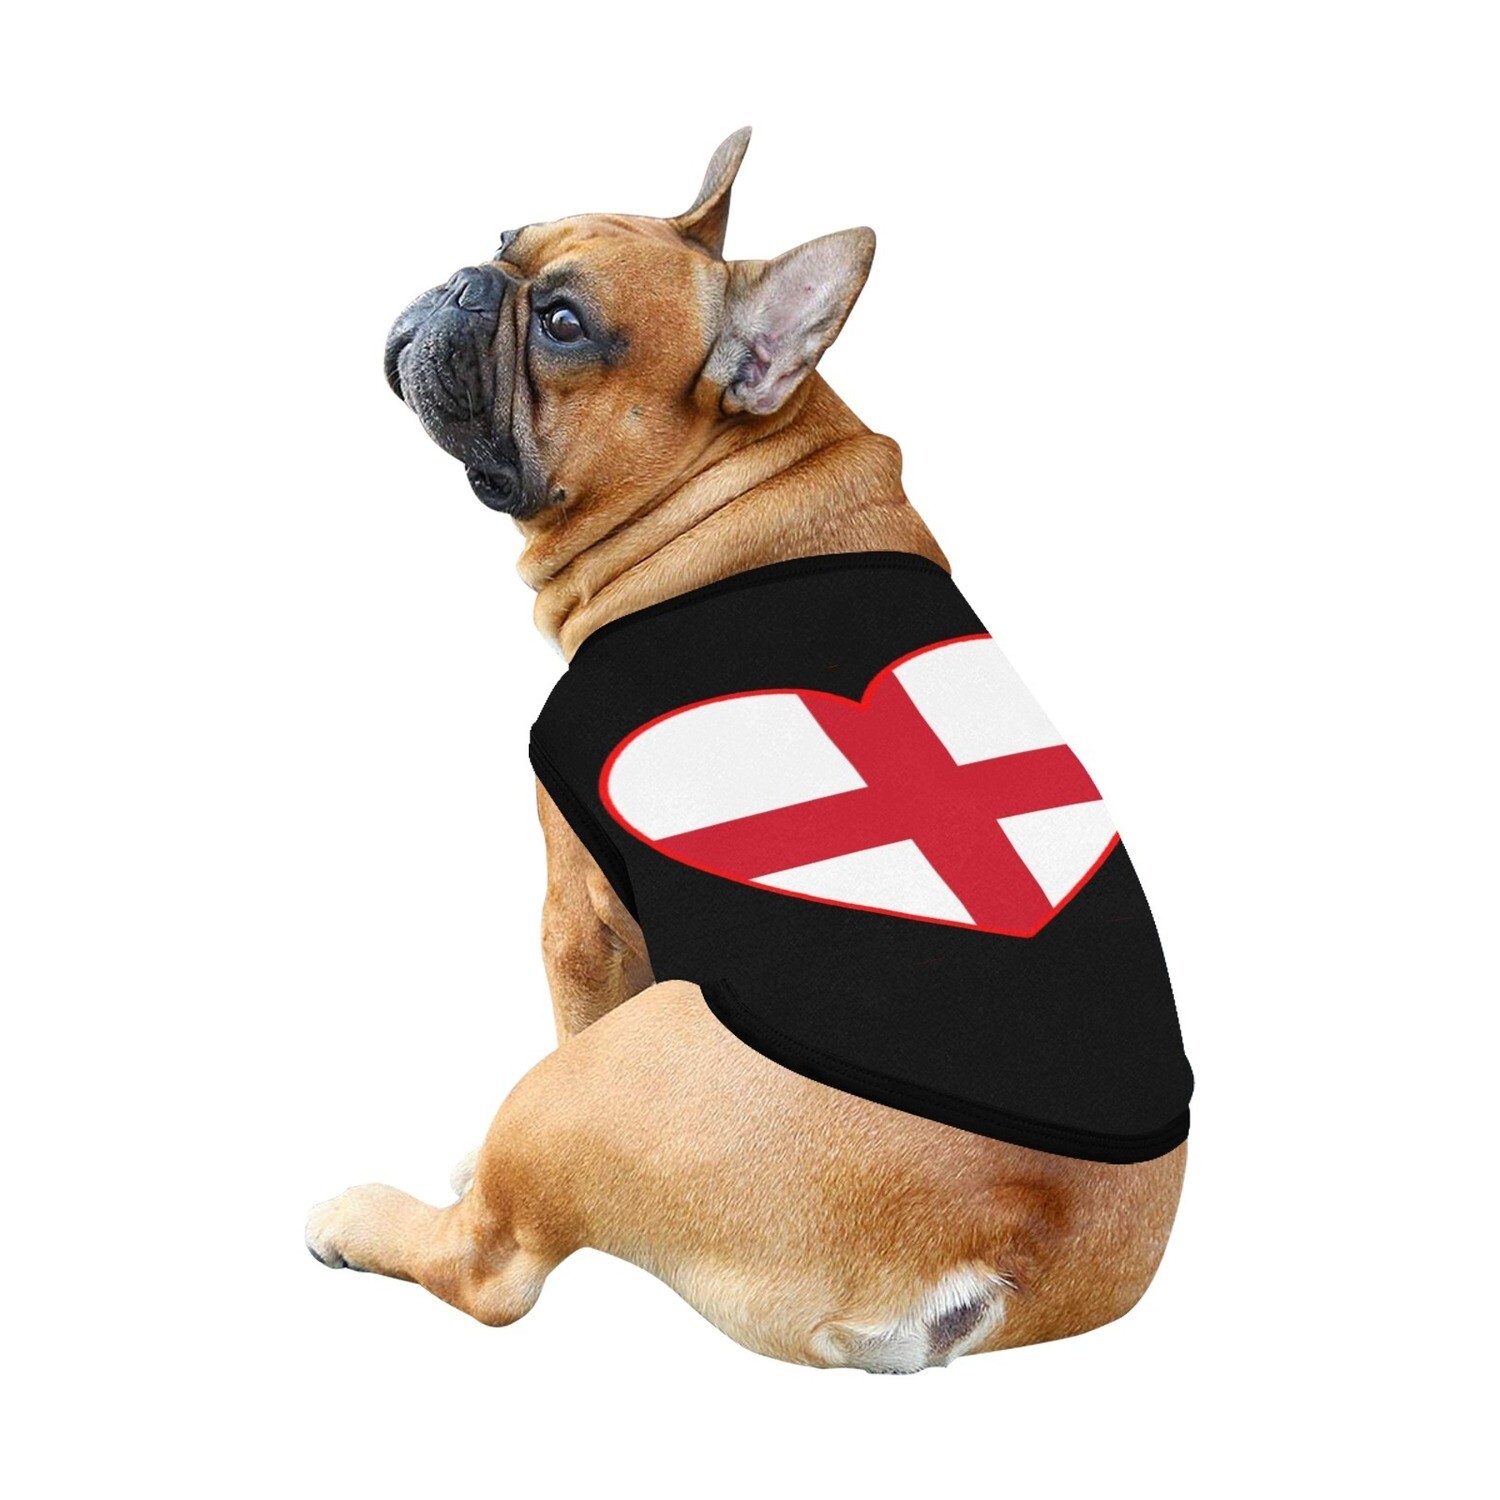 🐕🏴󠁧󠁢󠁥󠁮󠁧󠁿 I love England, English flag, dog t-shirt, dog gift, dog tank top, dog shirt, dog clothes, gift, 7 sizes XS to 3XL, heart shape, black